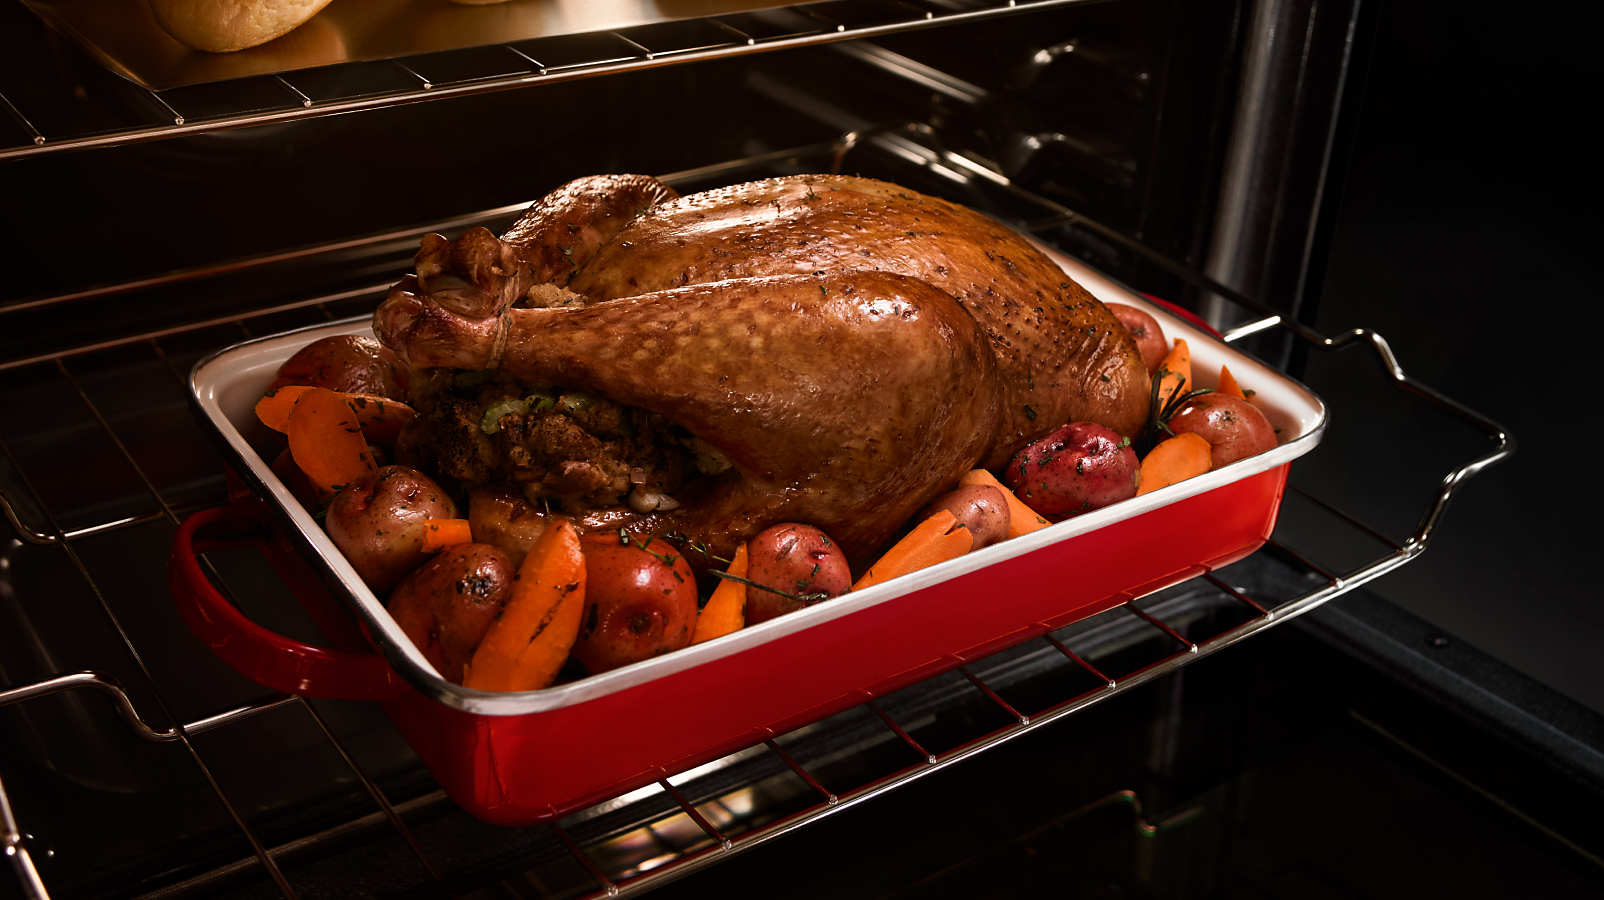 Large turkey roast in an oven